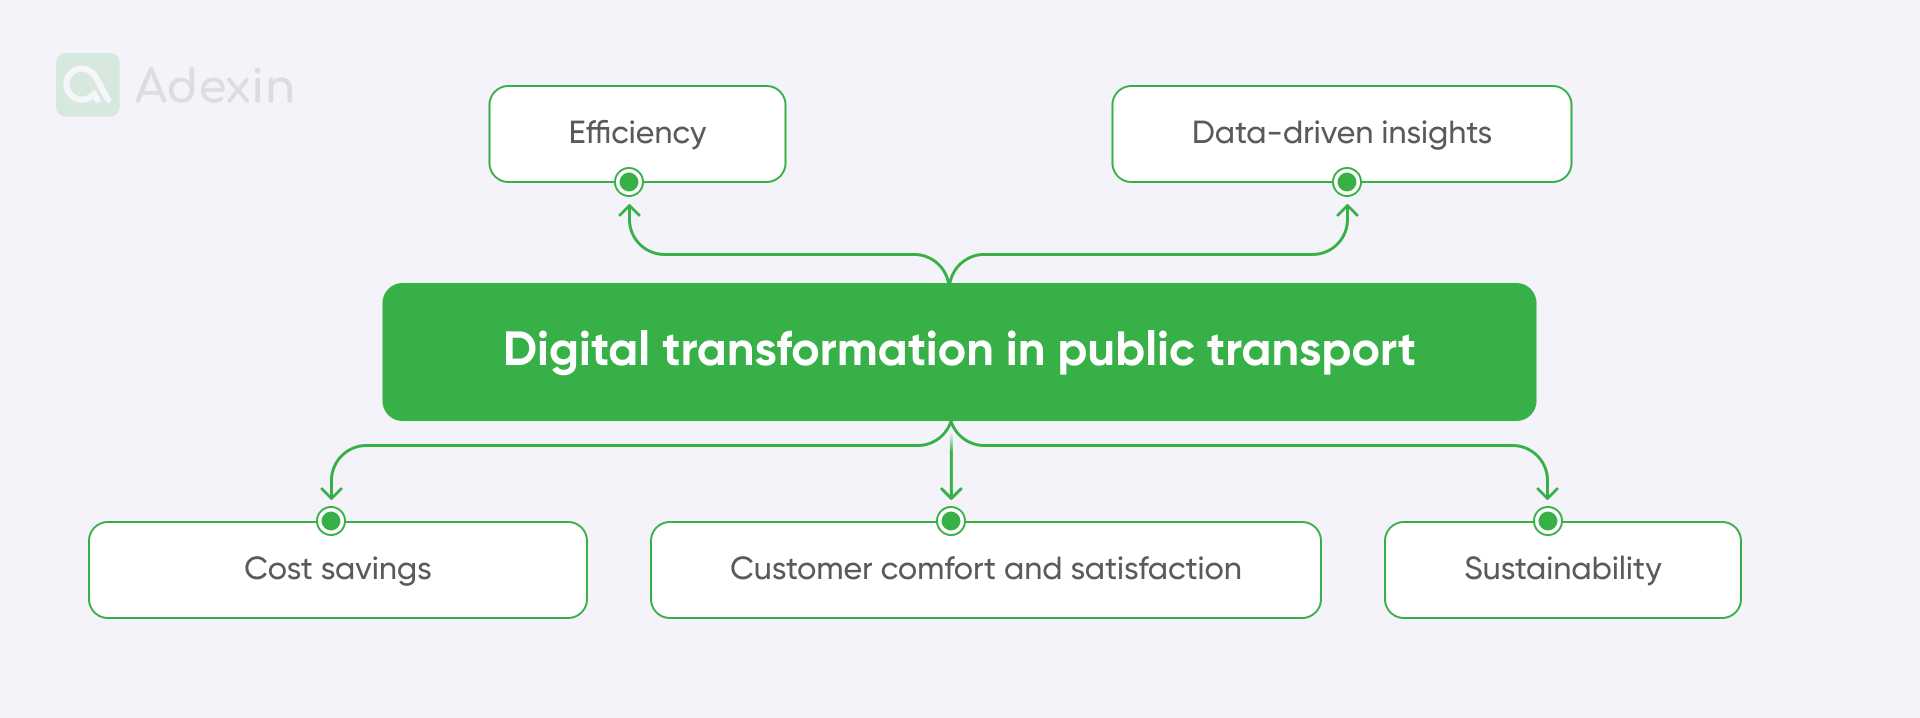 Elements of digital transformation in public transport